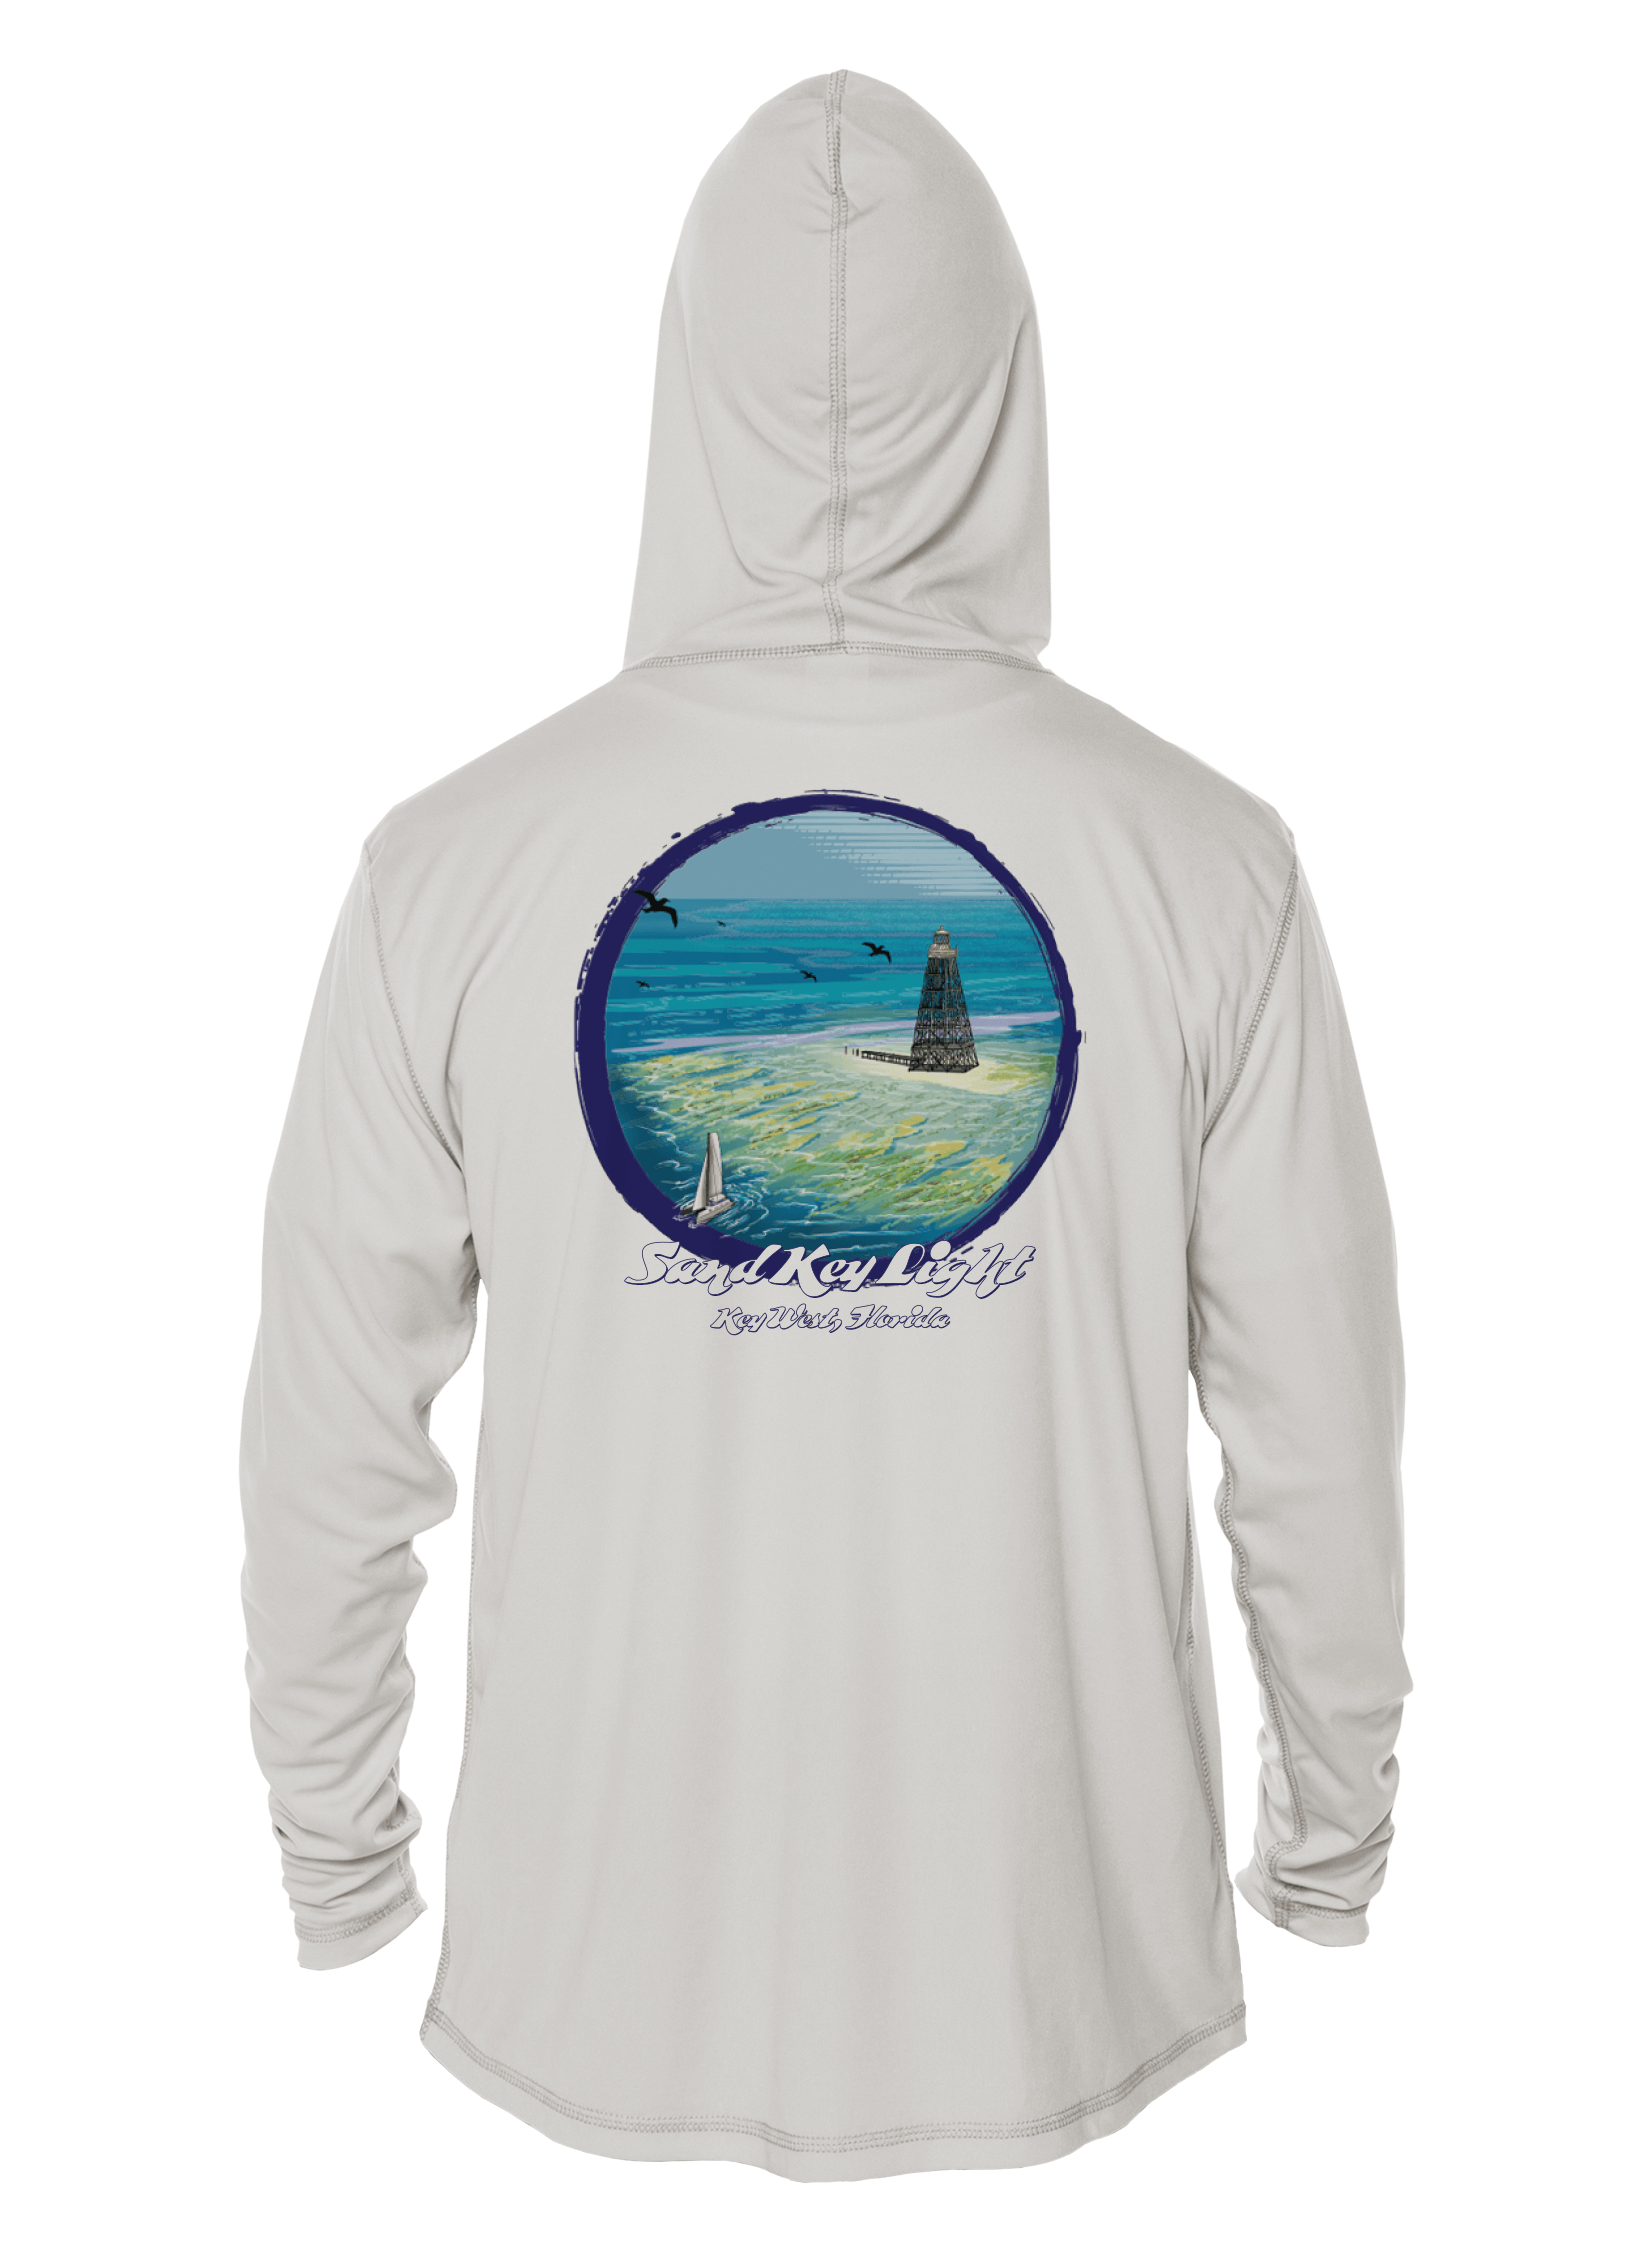 Key West Sun Shirts - Sand Bar Life - UPF 50+ Hoodie - Arctic Blue,SM